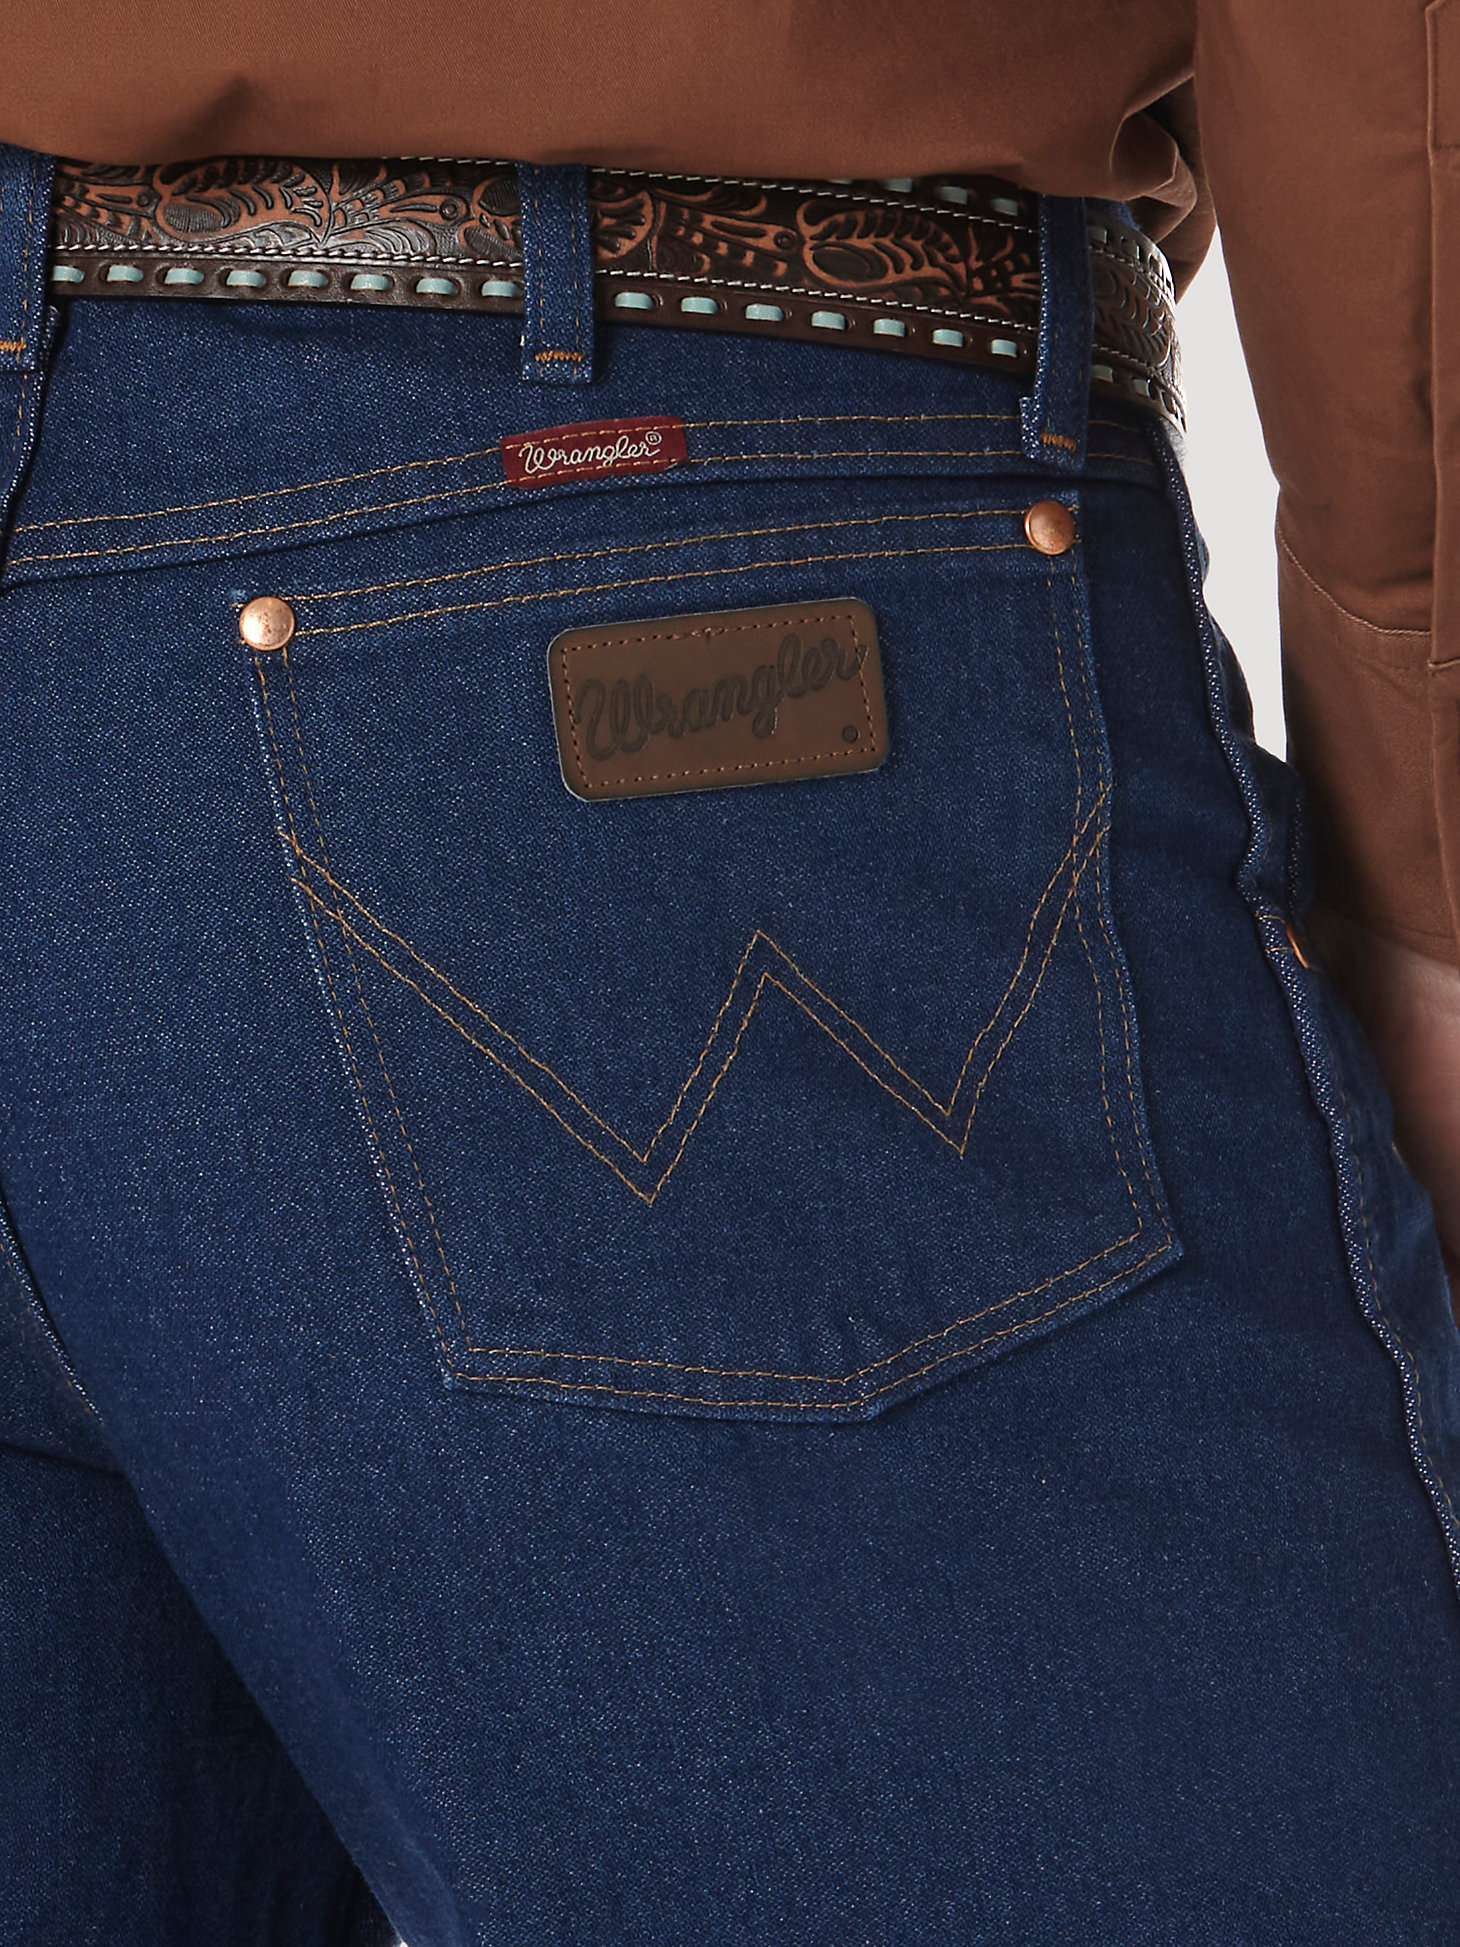 Wrangler® Cowboy Cut® Relaxed Fit Jean in Prewashed Indigo alternative view 3